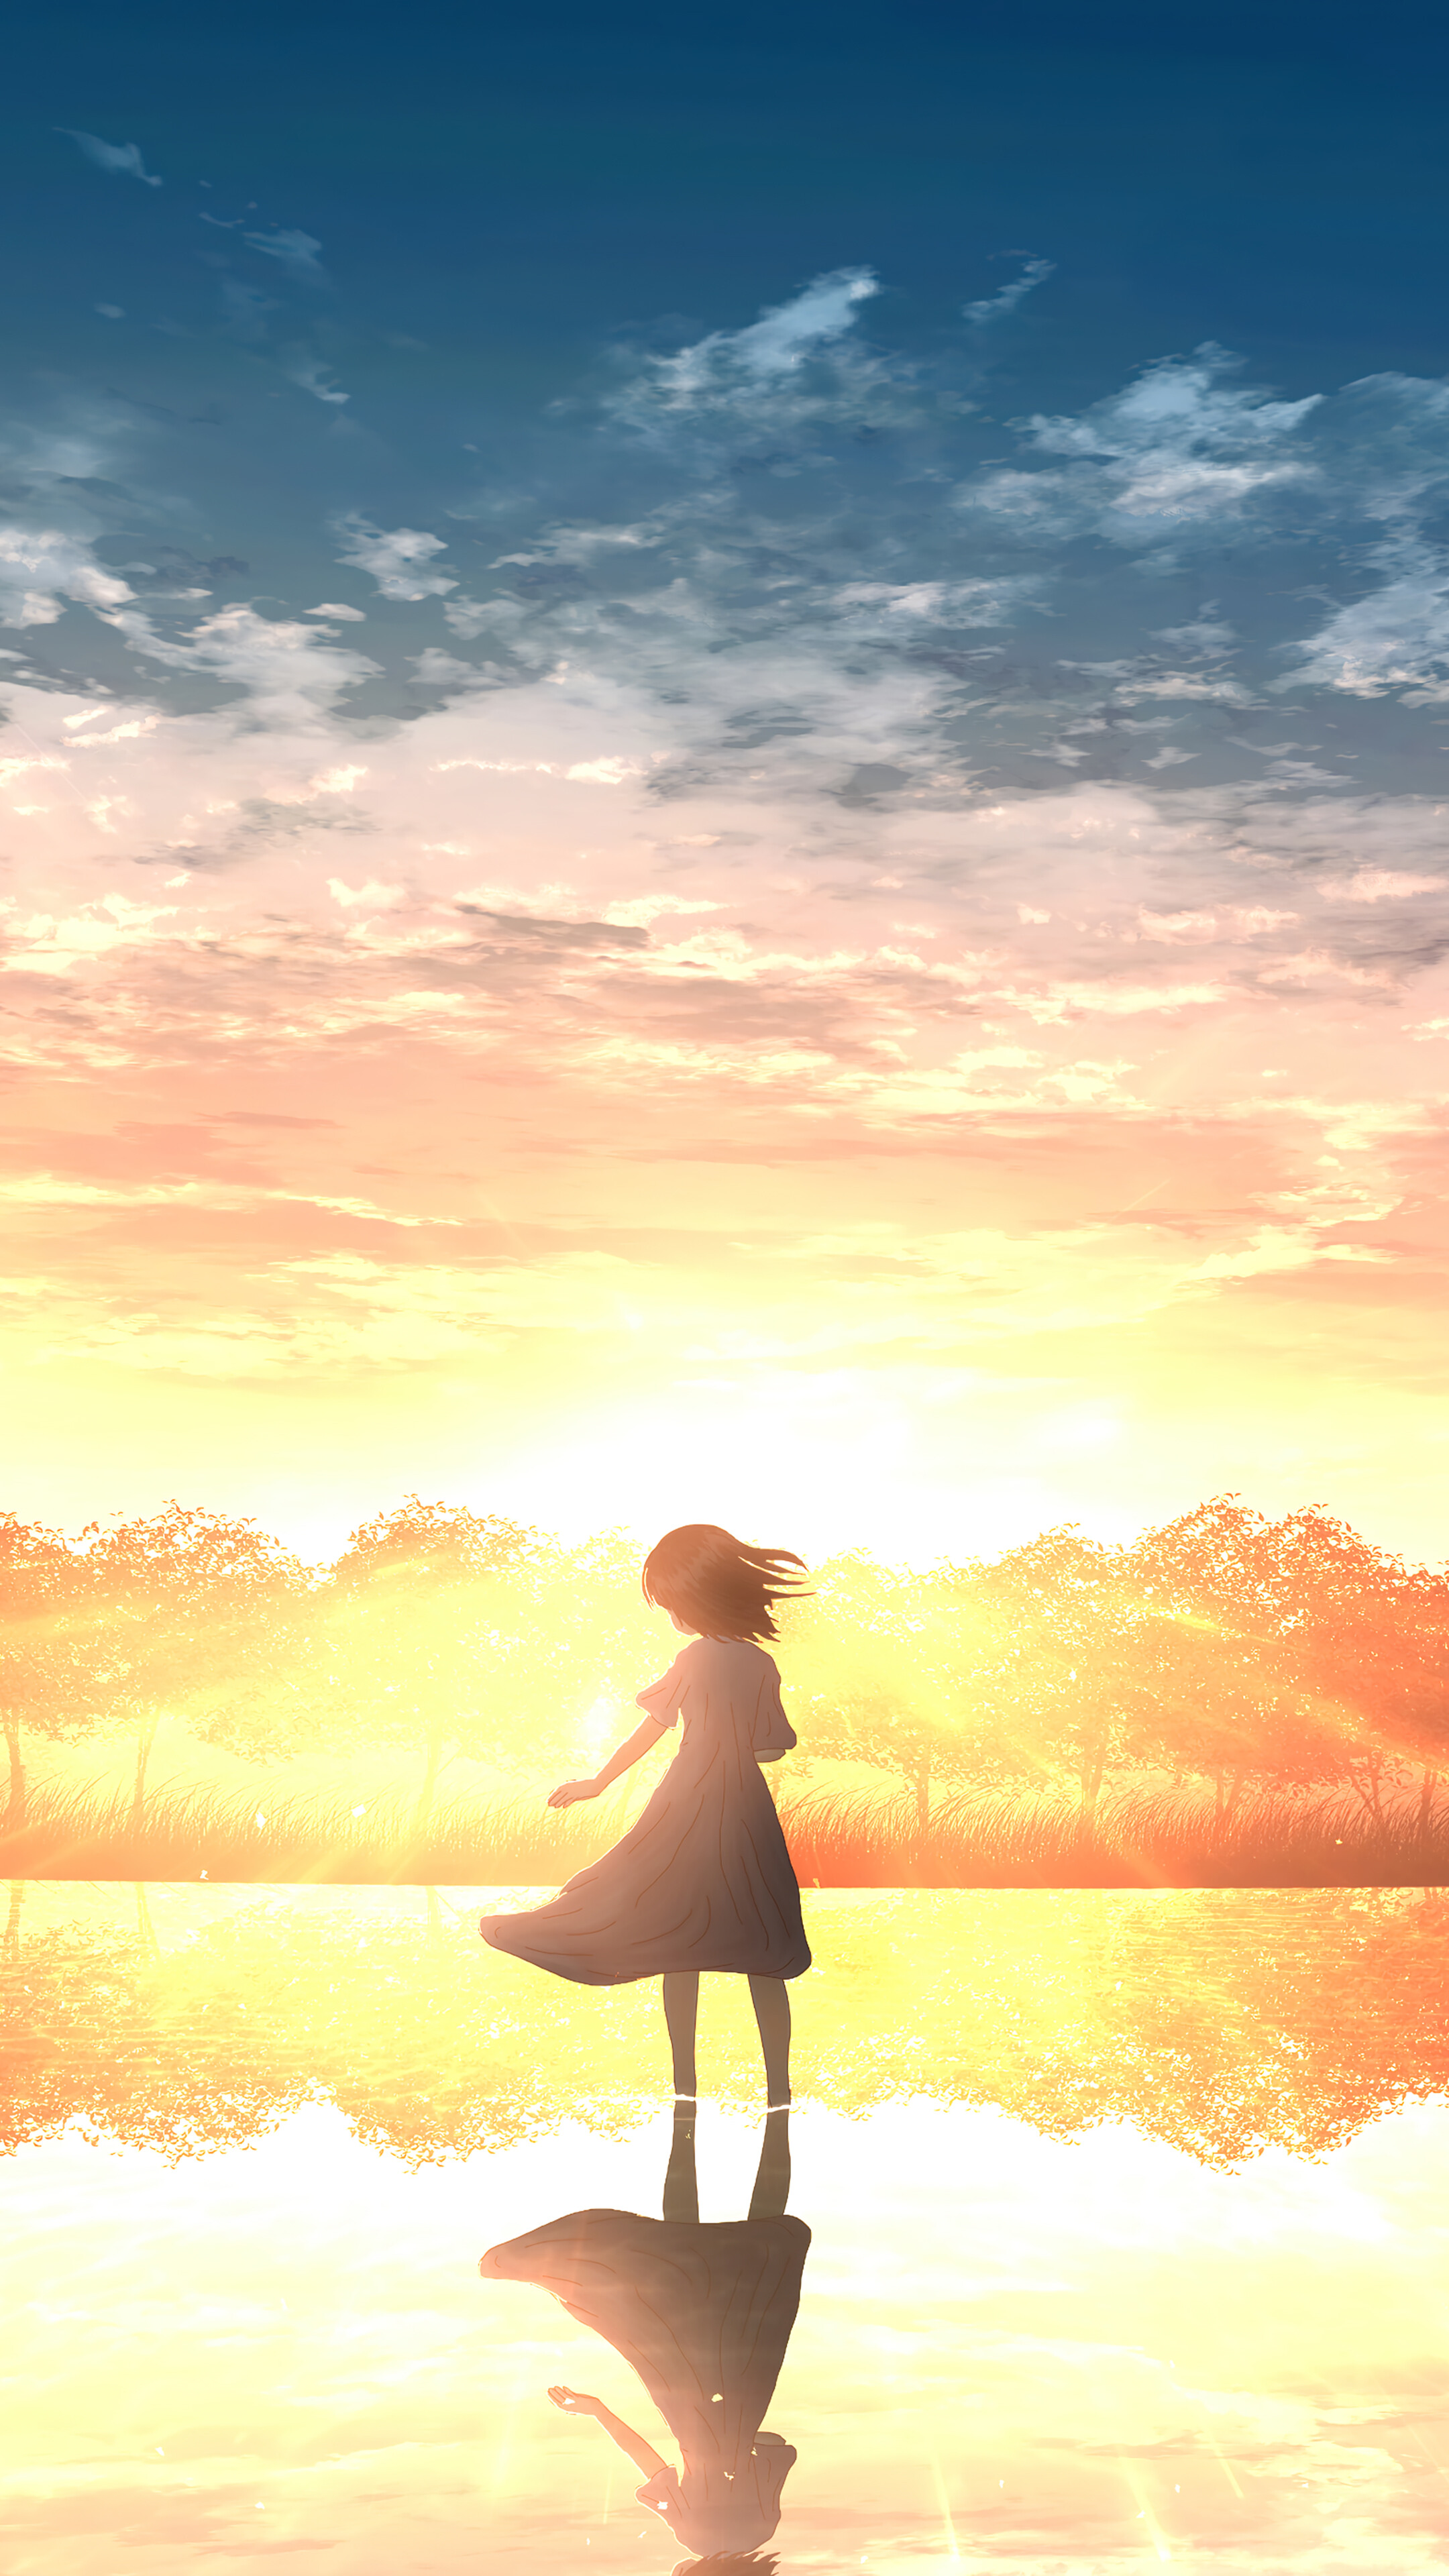 Sunrise Anime Scenery Wallpaper 4k Pc Desktop 664a